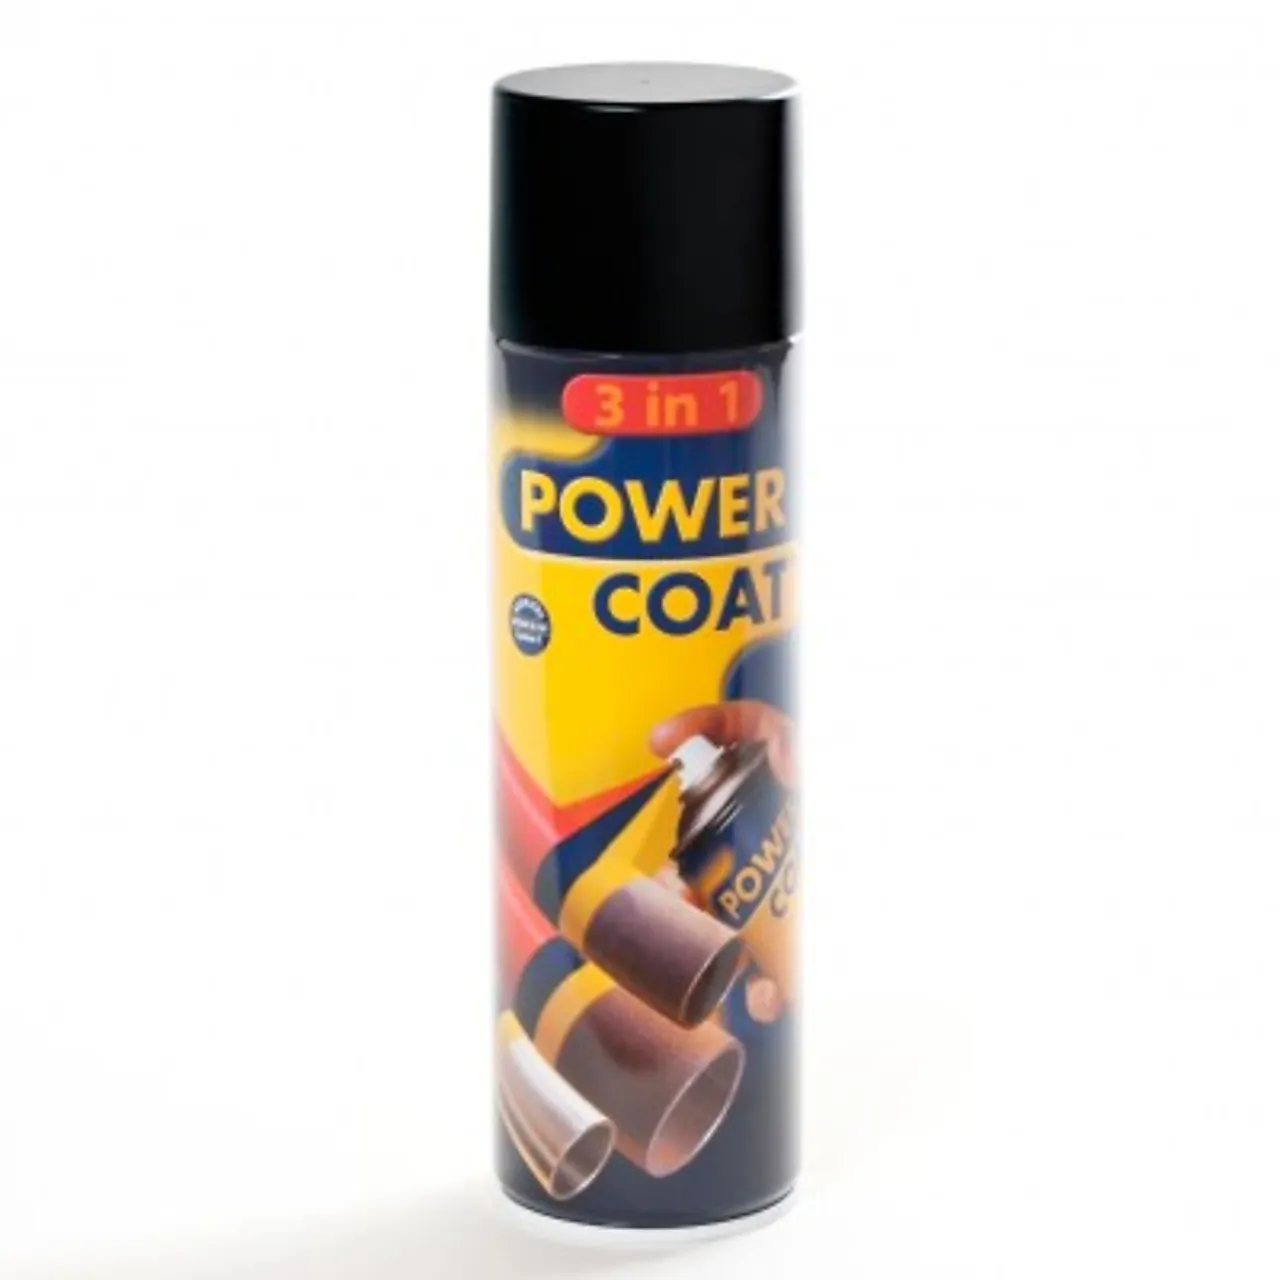 Spraymaling powcoa 3in1 svart glans ral9005